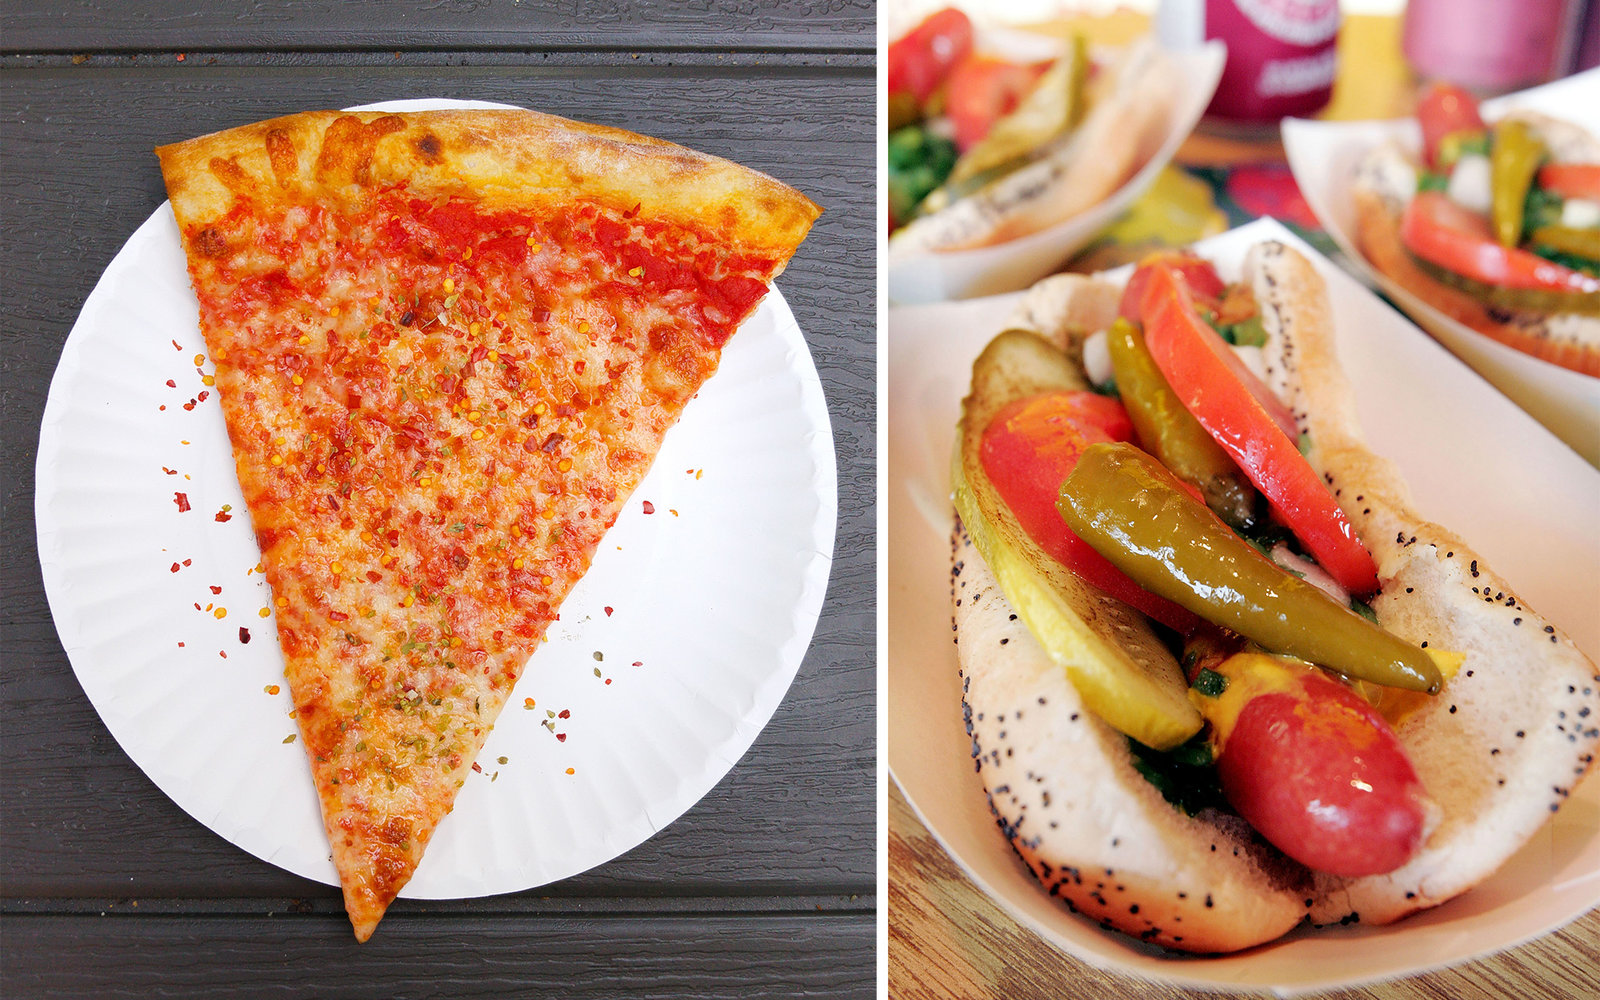 nyc pizza vs chicago hot dog